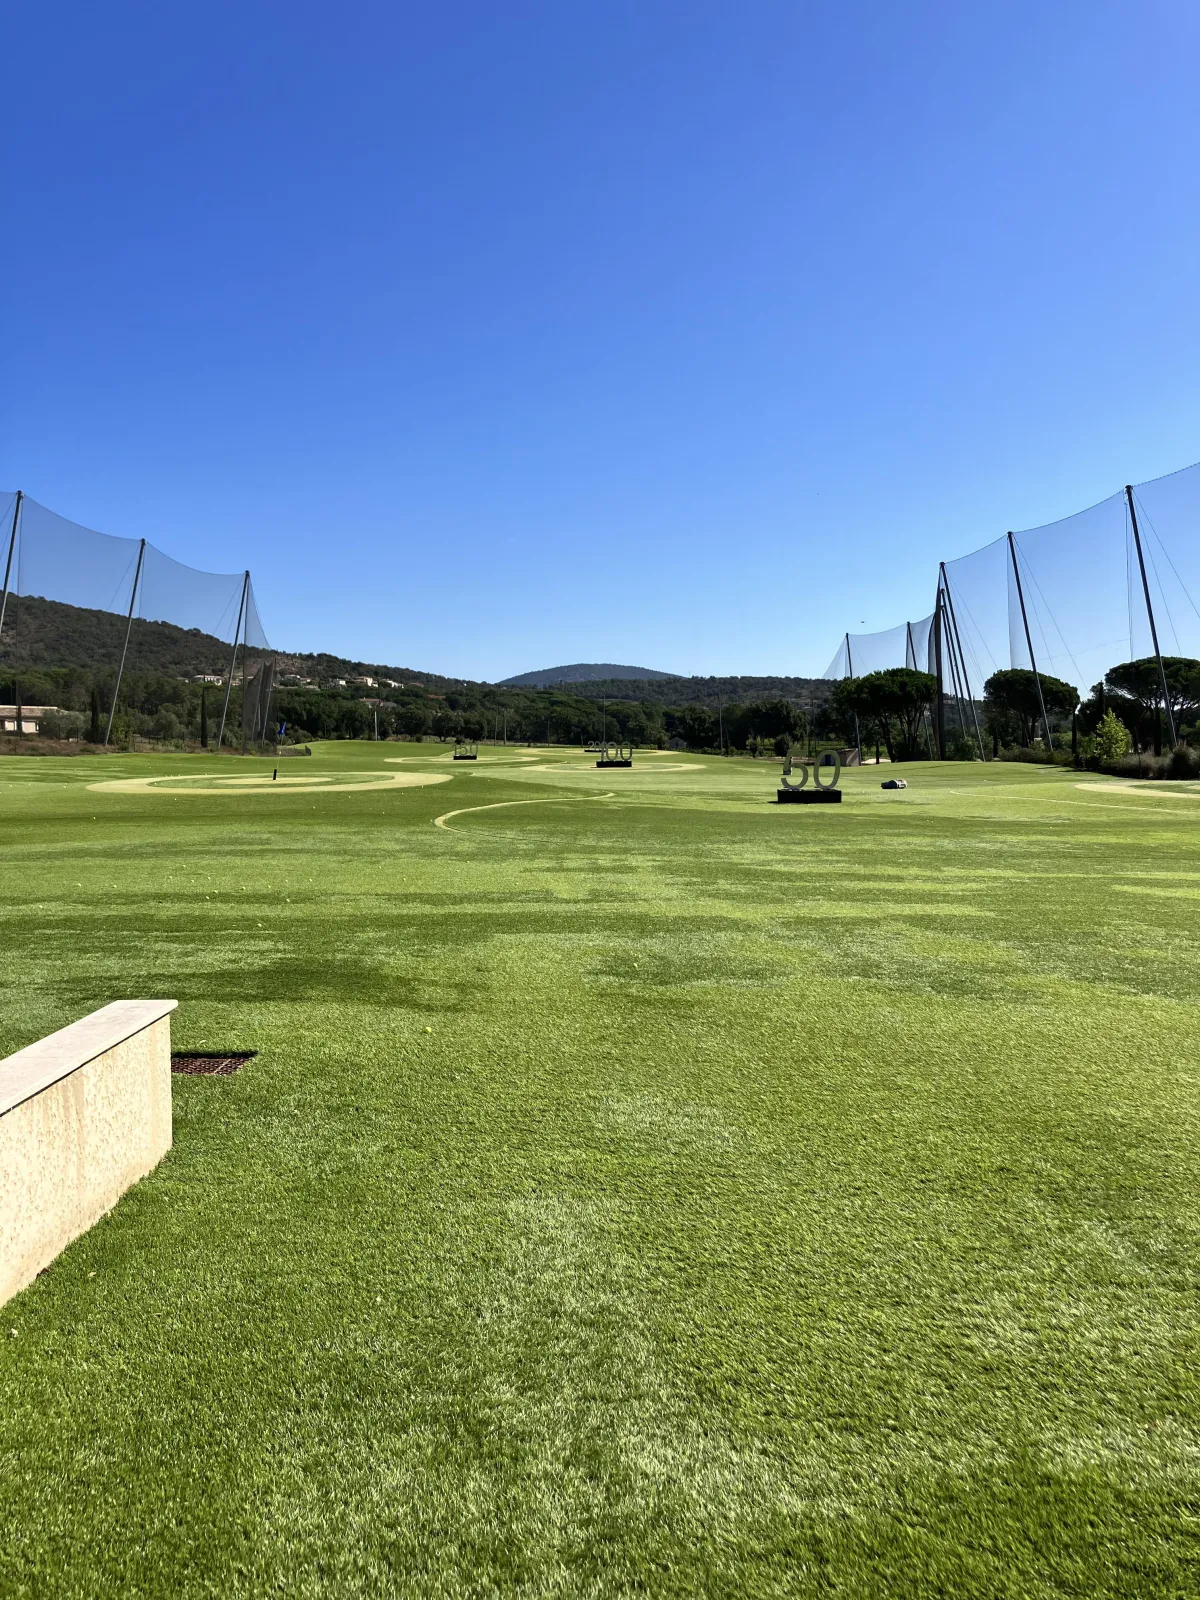 golf range with artificial grass